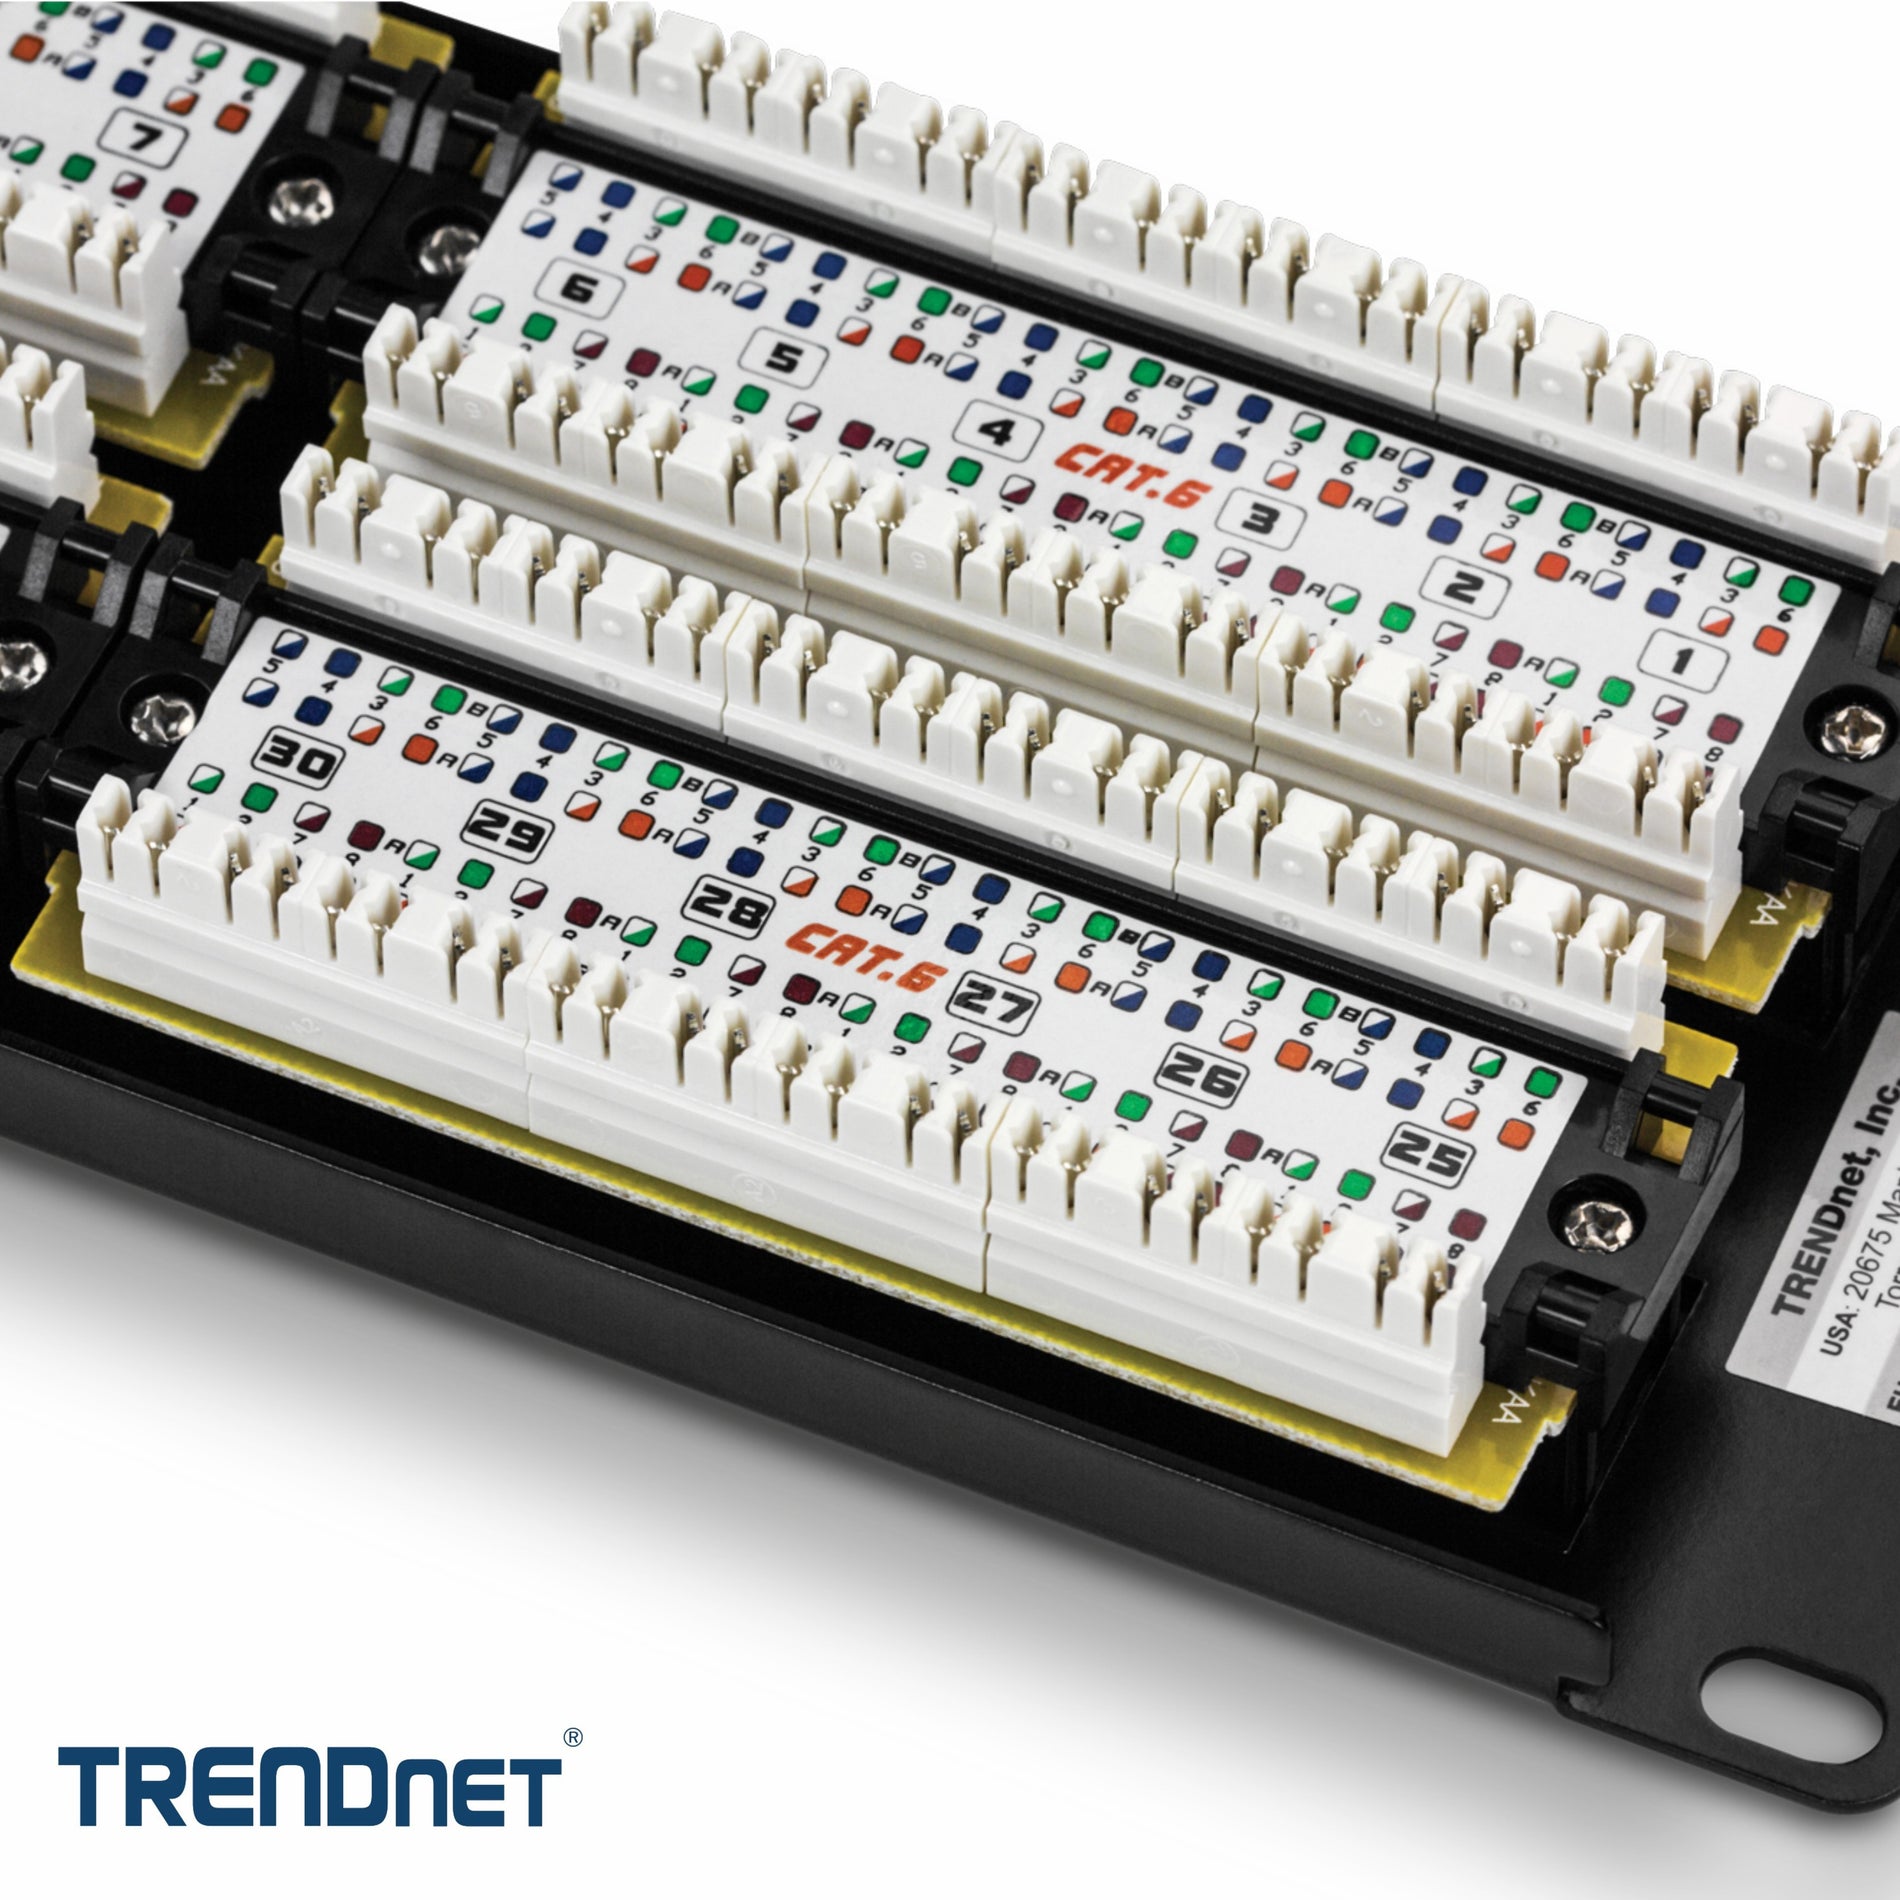 TRENDnet TC-P48C6 Cat6 48-port Unshielded Patch Panel, Wallmount Or Rackmount, Ethernet, Fast Ethernet, Gigabit Applications, Black